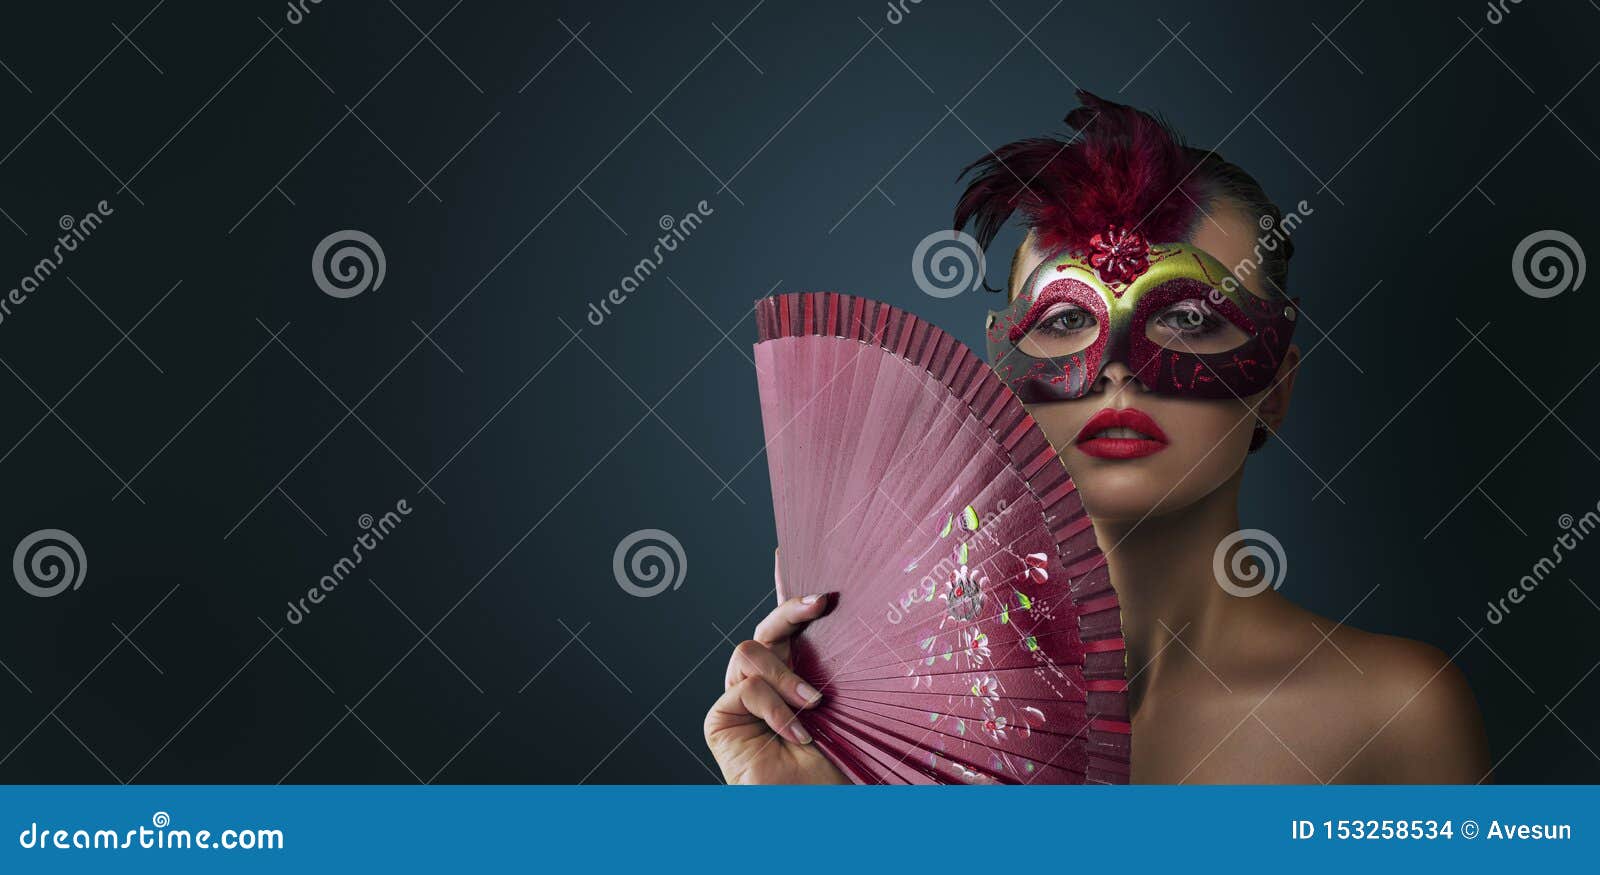 Maskerade-Karnevalsmaske der Frau tragende venetianische. Maskerade-Karnevalsmaske der Schönheitsmode-modell-Frau tragende venetianische an der Partei über dunklem Hintergrund